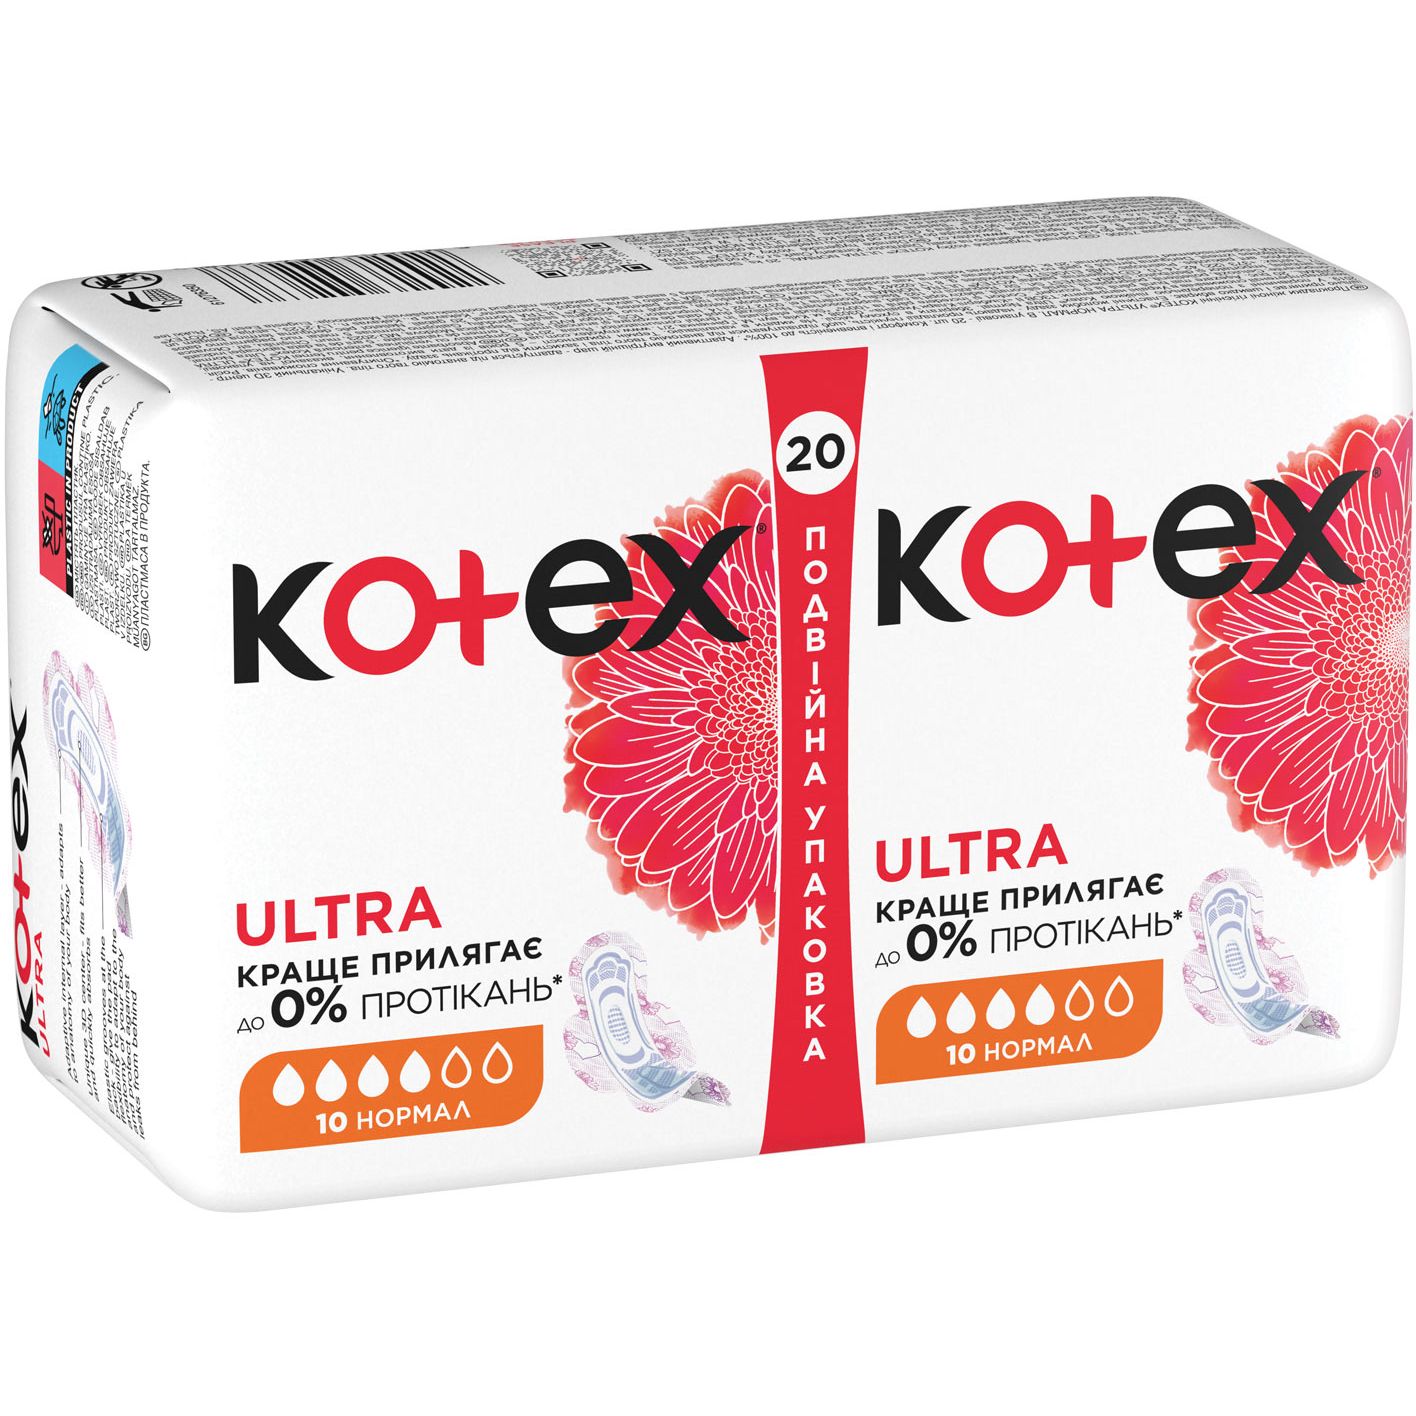 Гигиенические прокладки Kotex Ultra Dry Normal Duo 20 шт. - фото 7